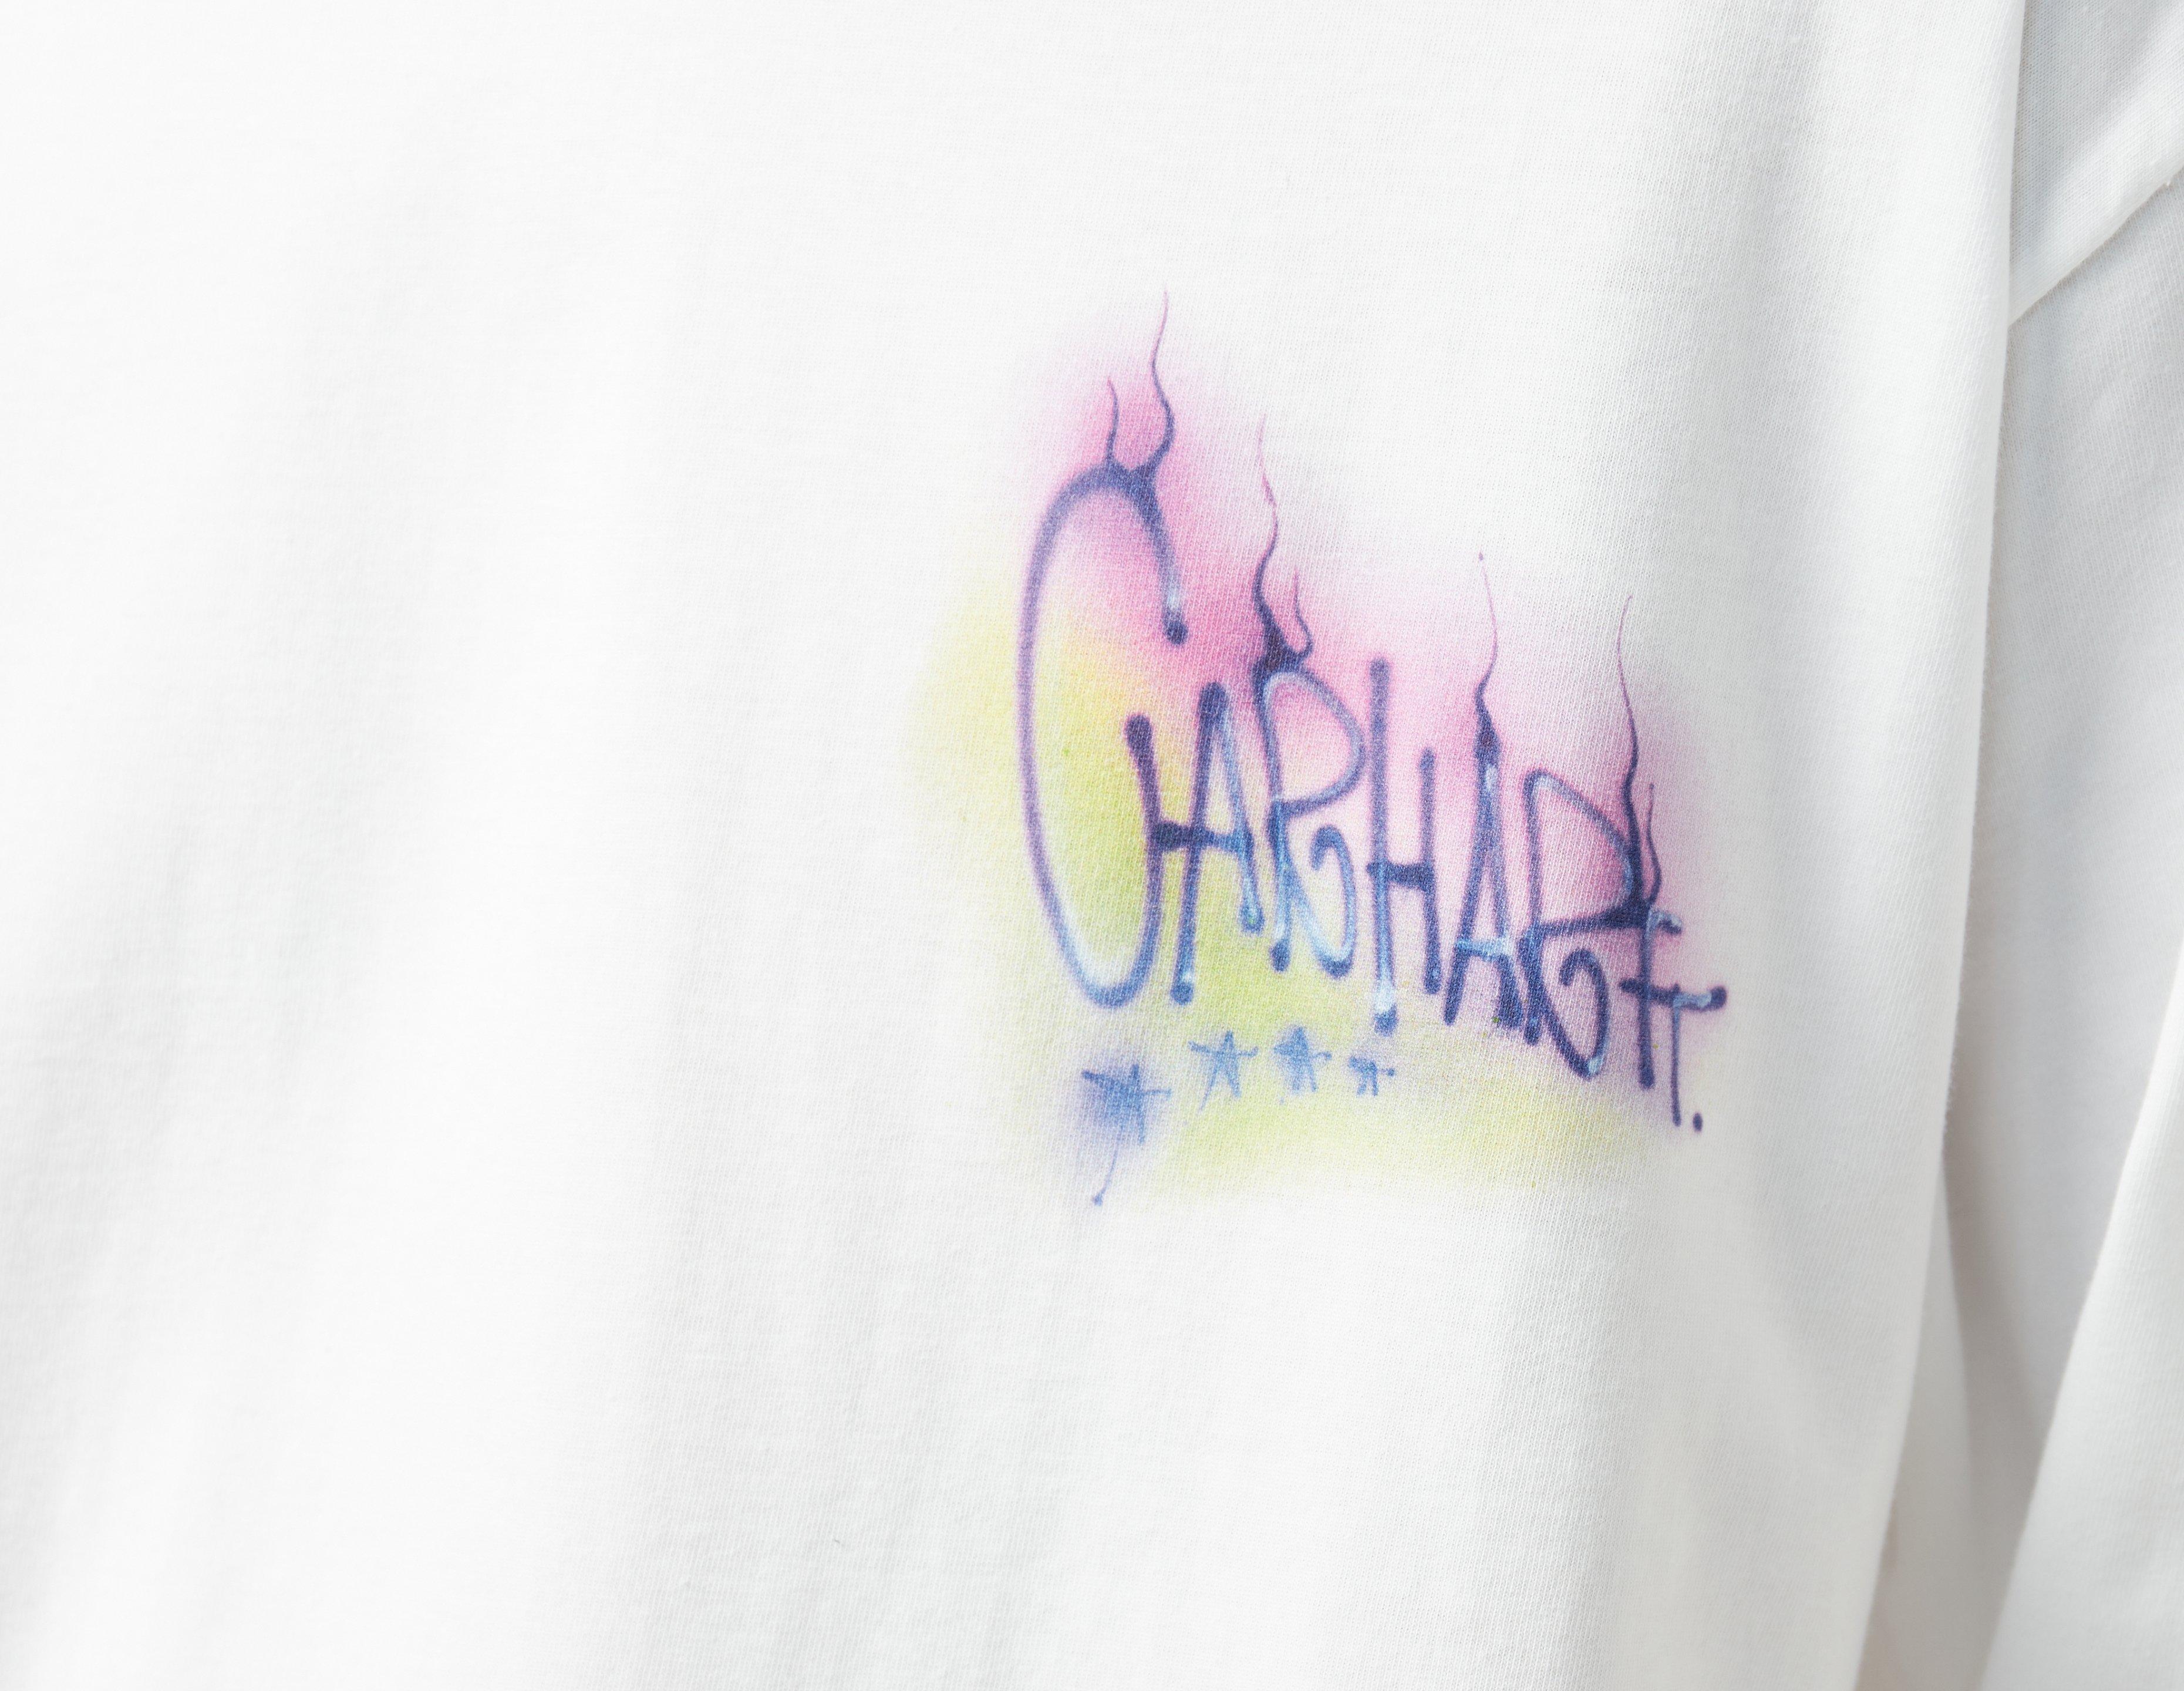 T-Shirts Homme | Tropical Organic T-Shirt White/Purple | Carhartt Wip »  Ritam Kulturizma